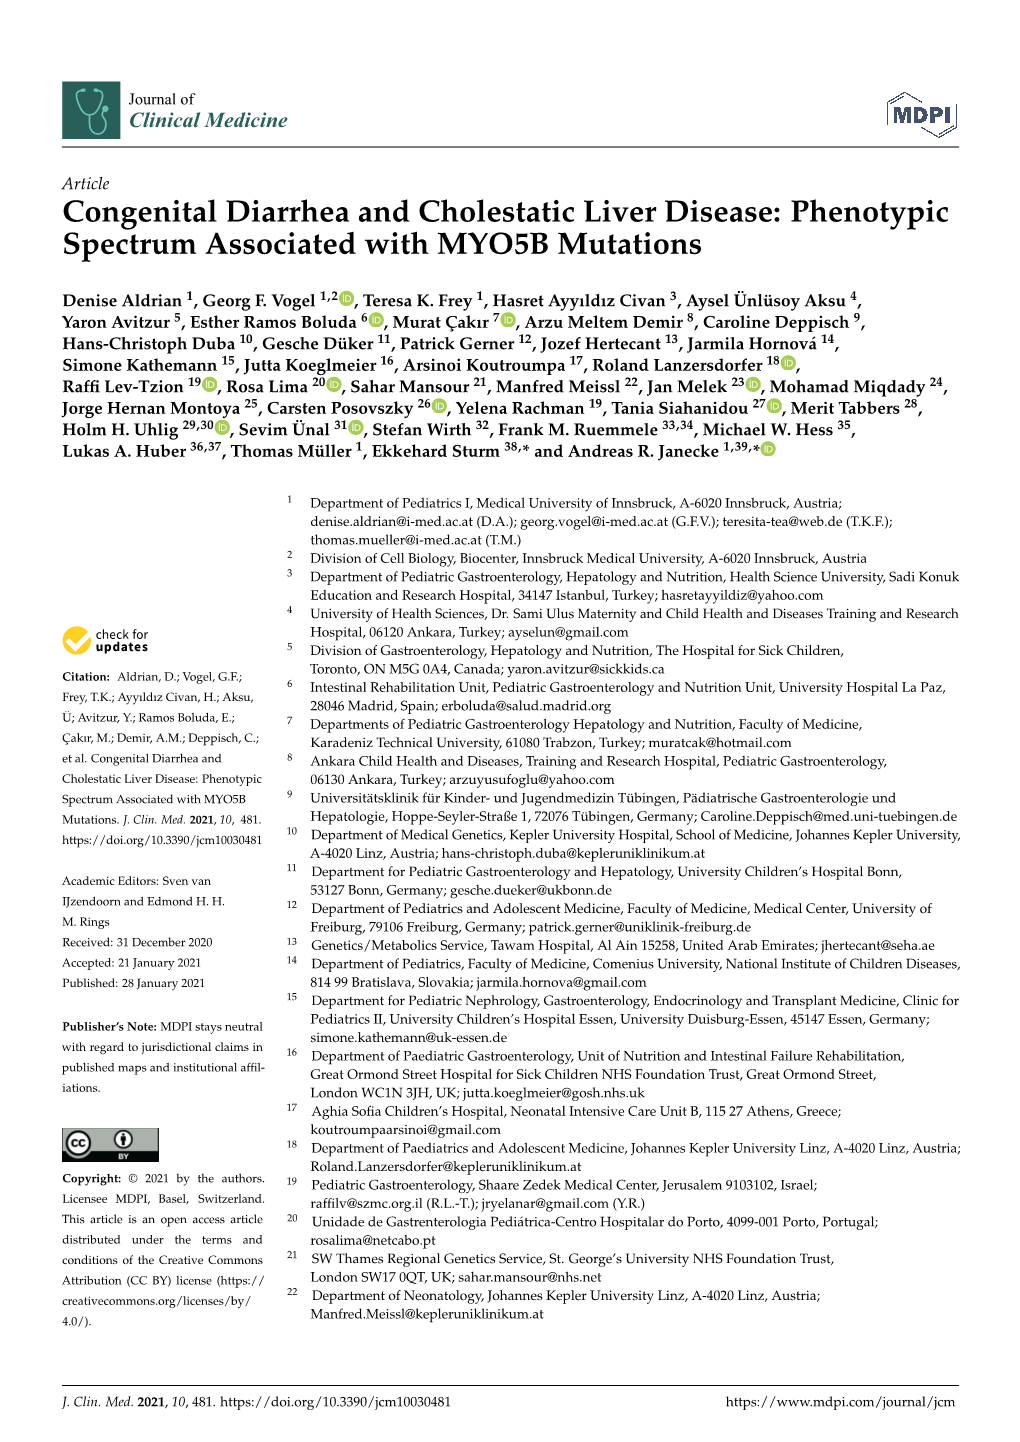 Phenotypic Spectrum Associated with MYO5B Mutations